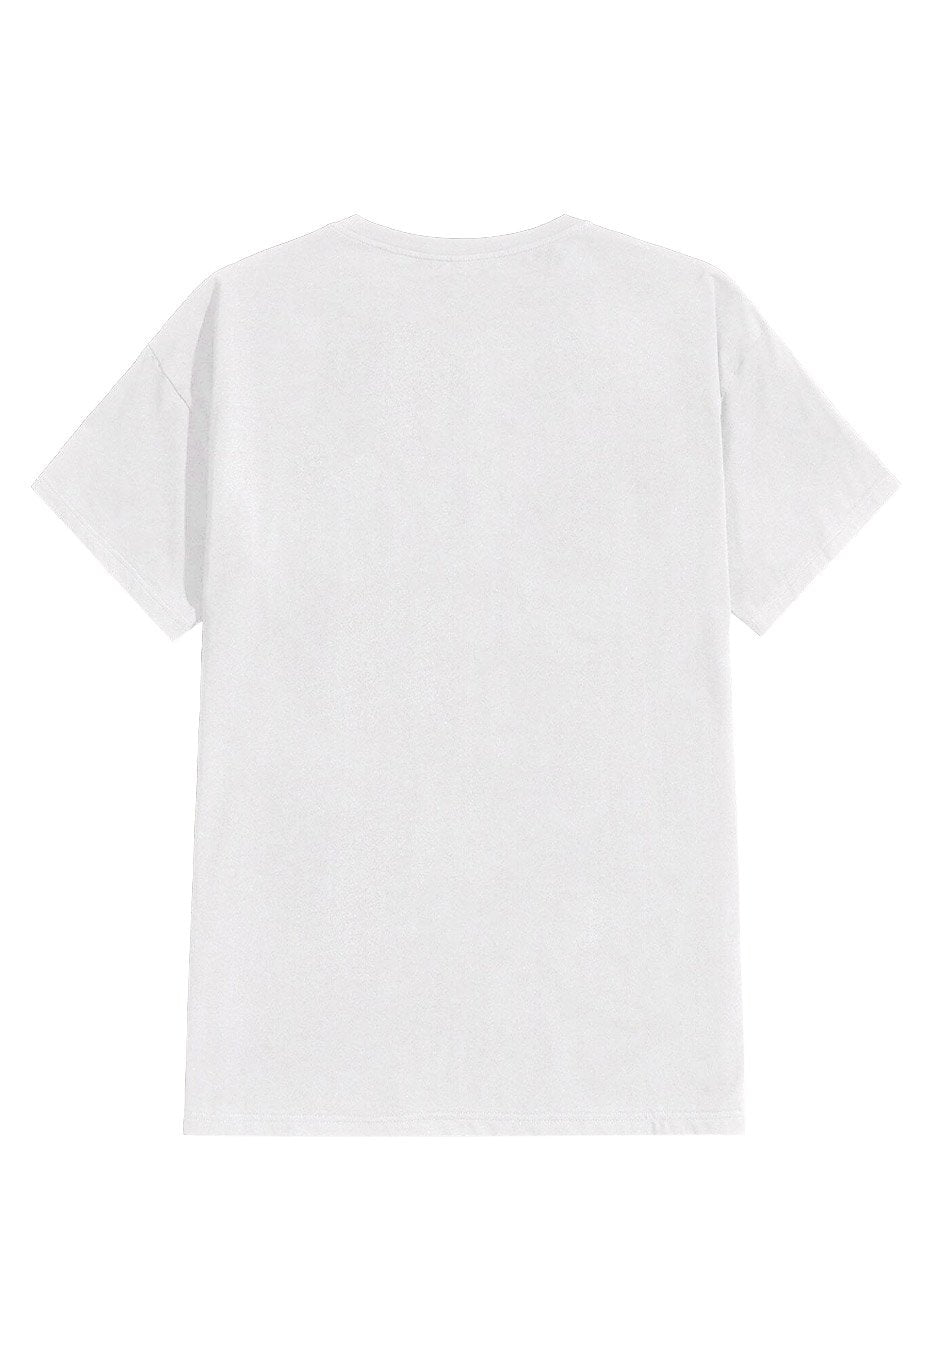 Ramones - Animal Skin White - T-Shirt